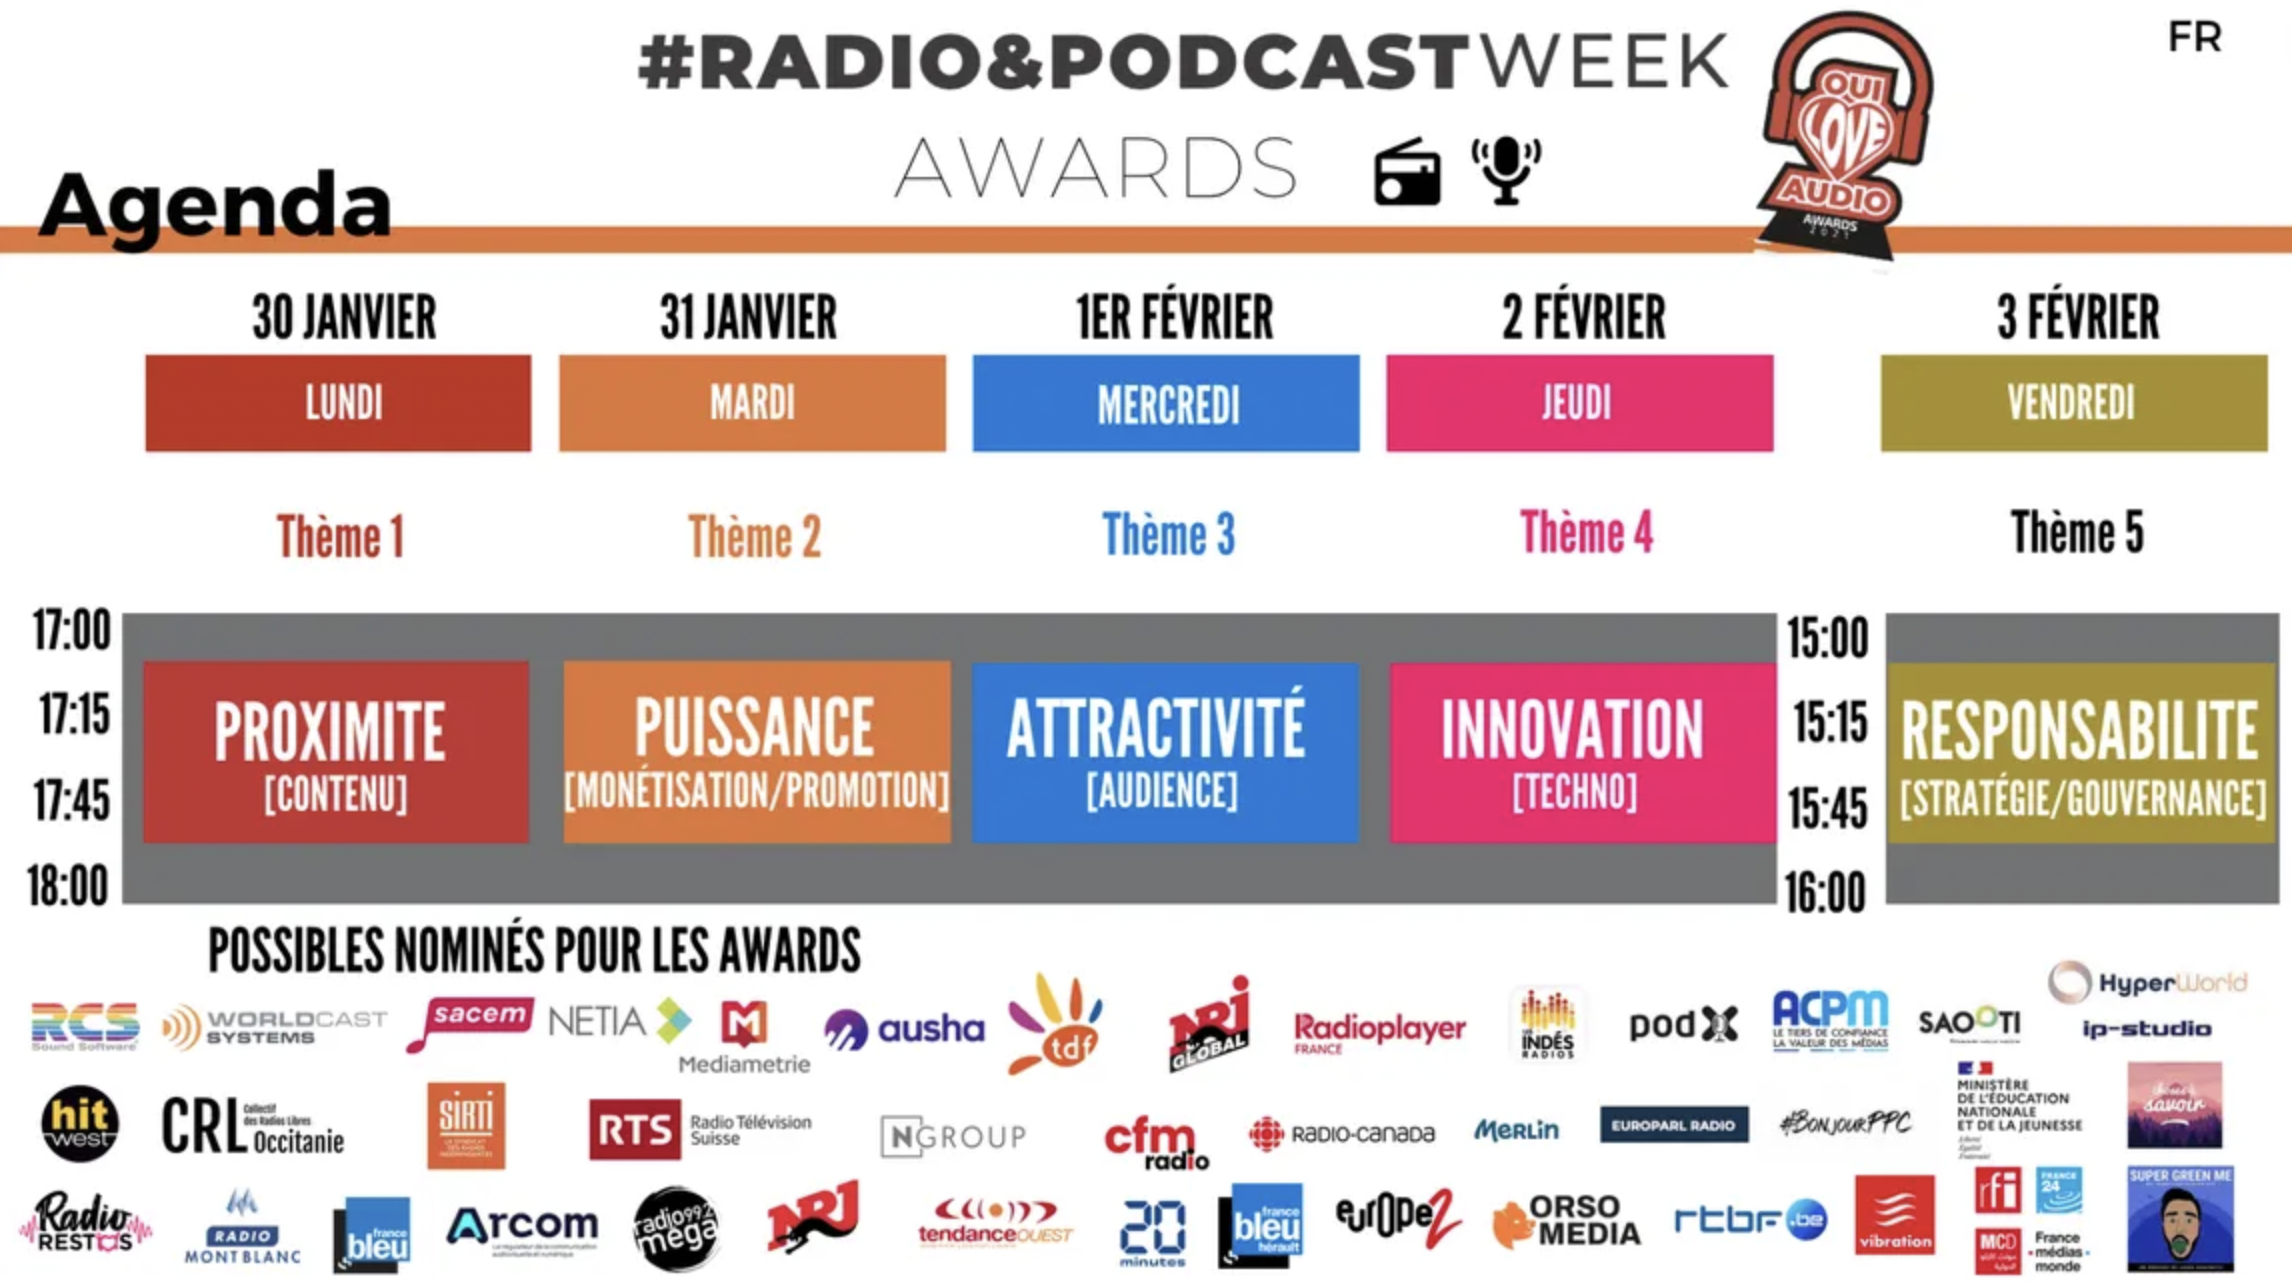 La Radio&Podcast Week aura lieu du 30 janvier au 3 février